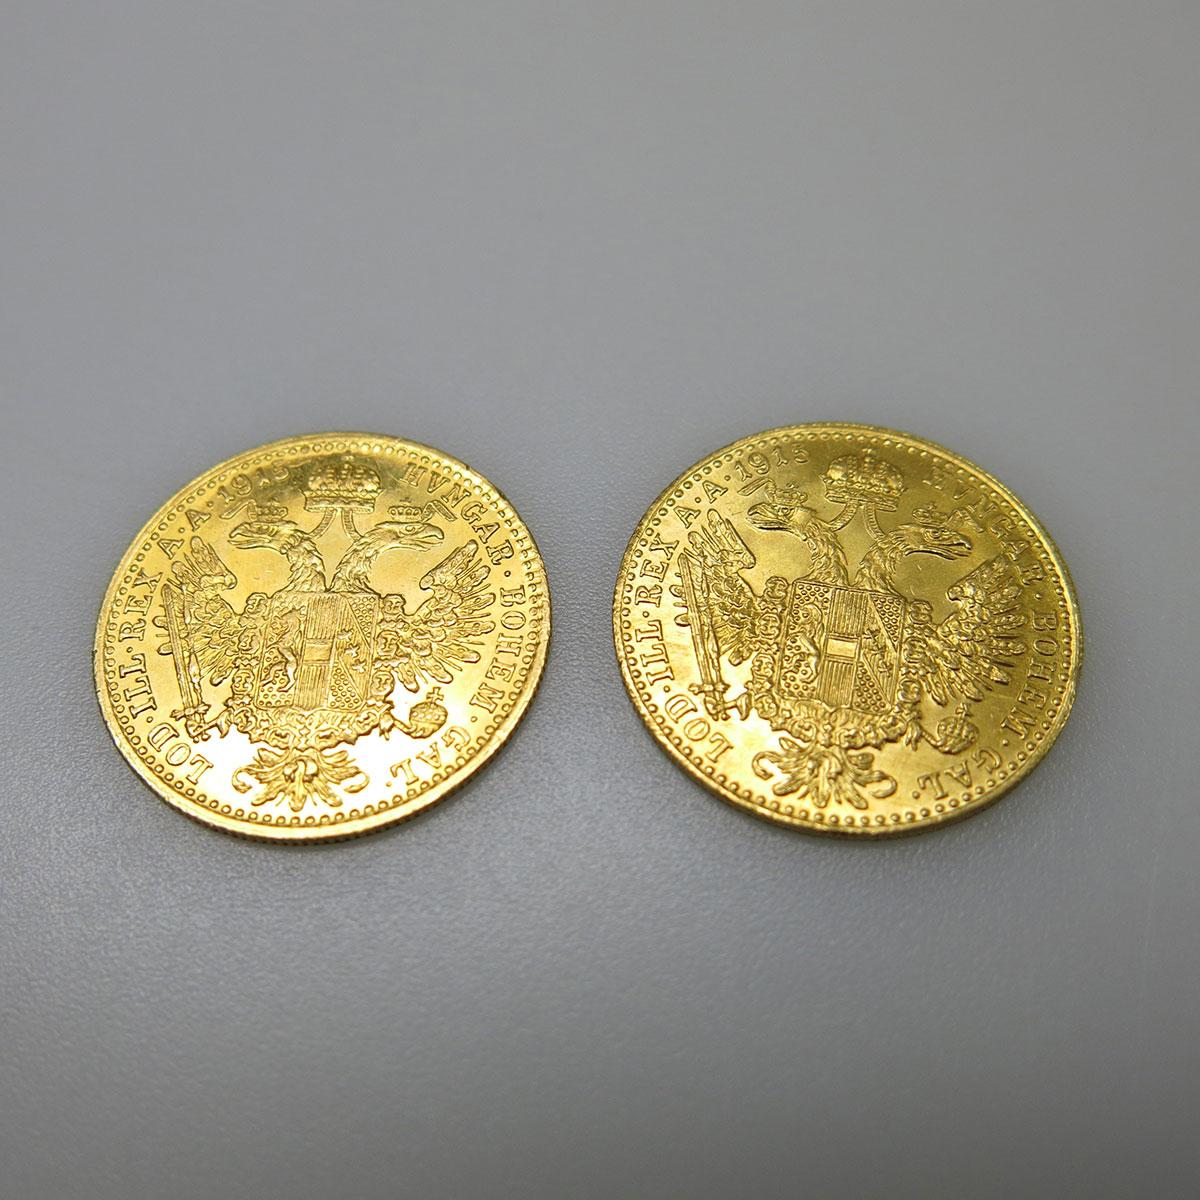 2 X Austrian 1915 Restrike One Ducat Gold Coins